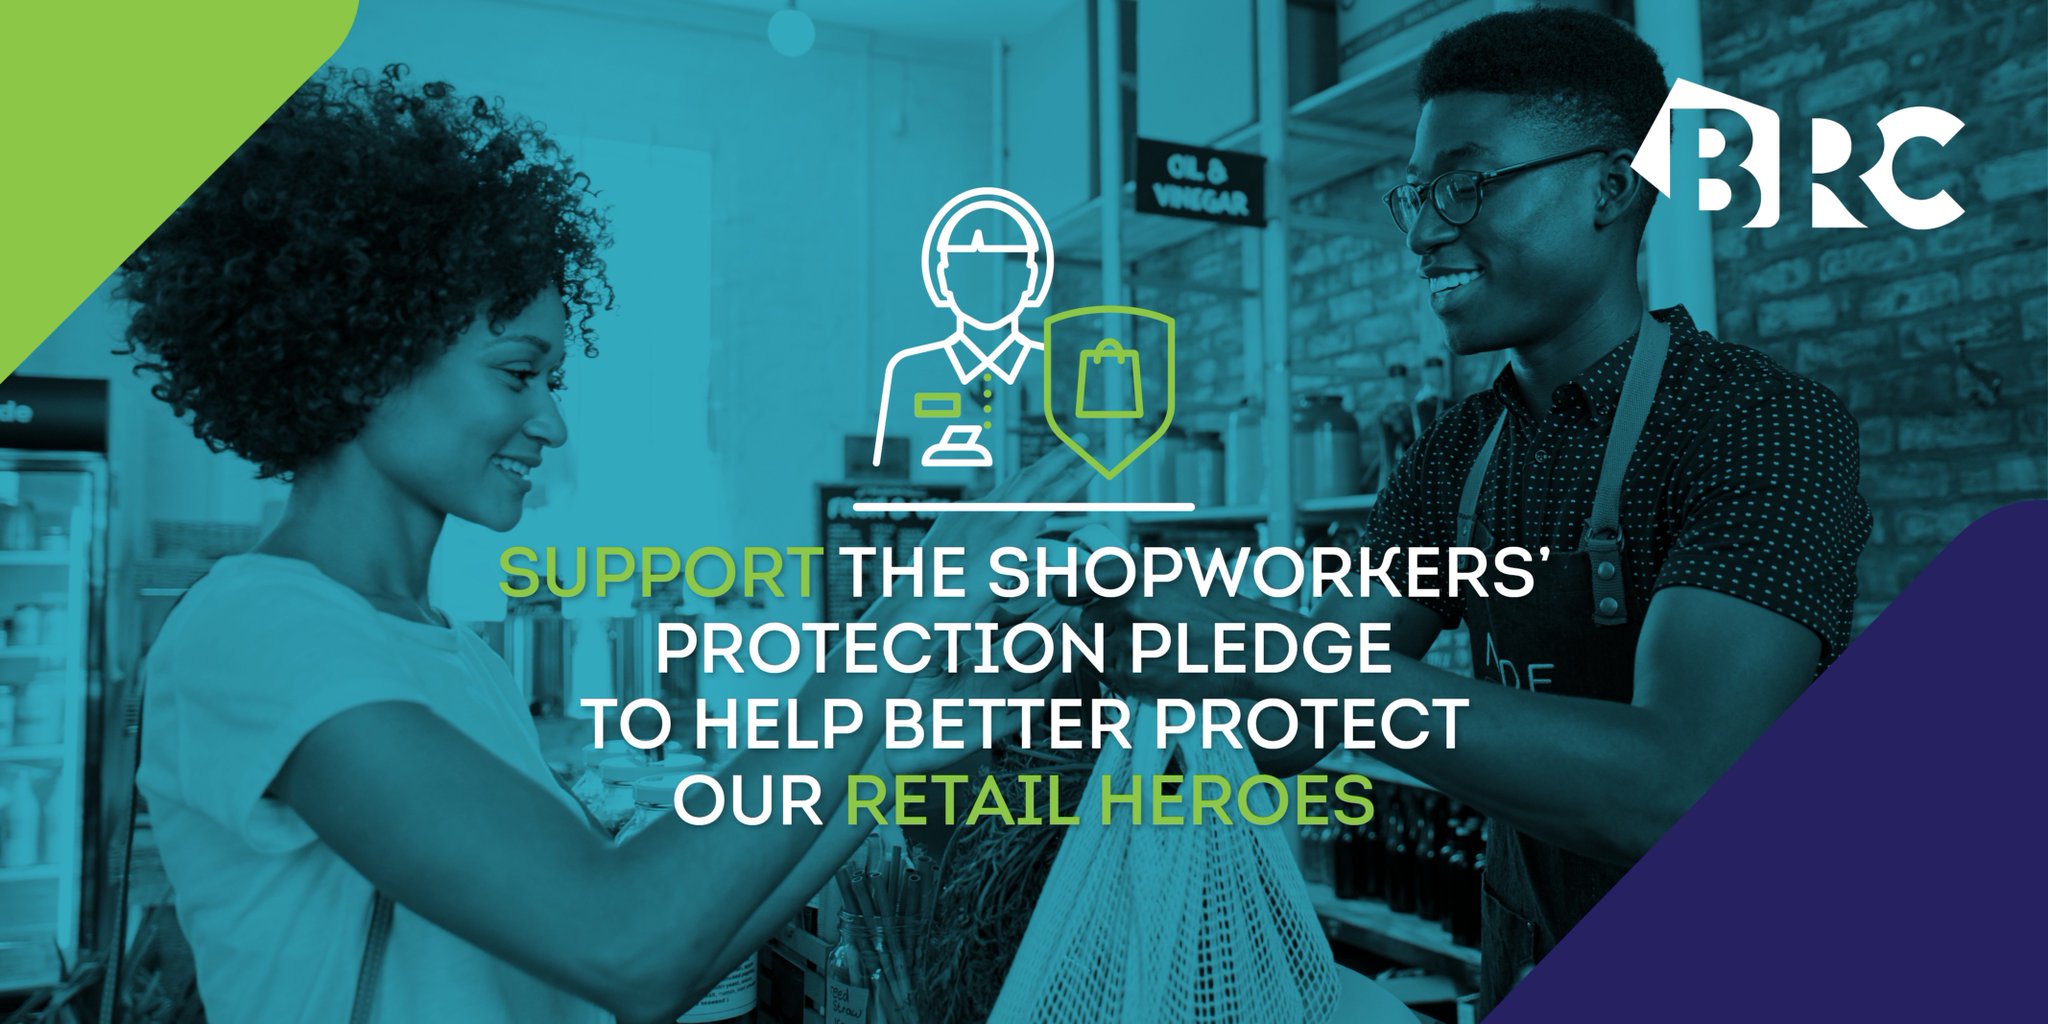 British Retail Consortium (BRC) Shopworkers’ Protection Pledge